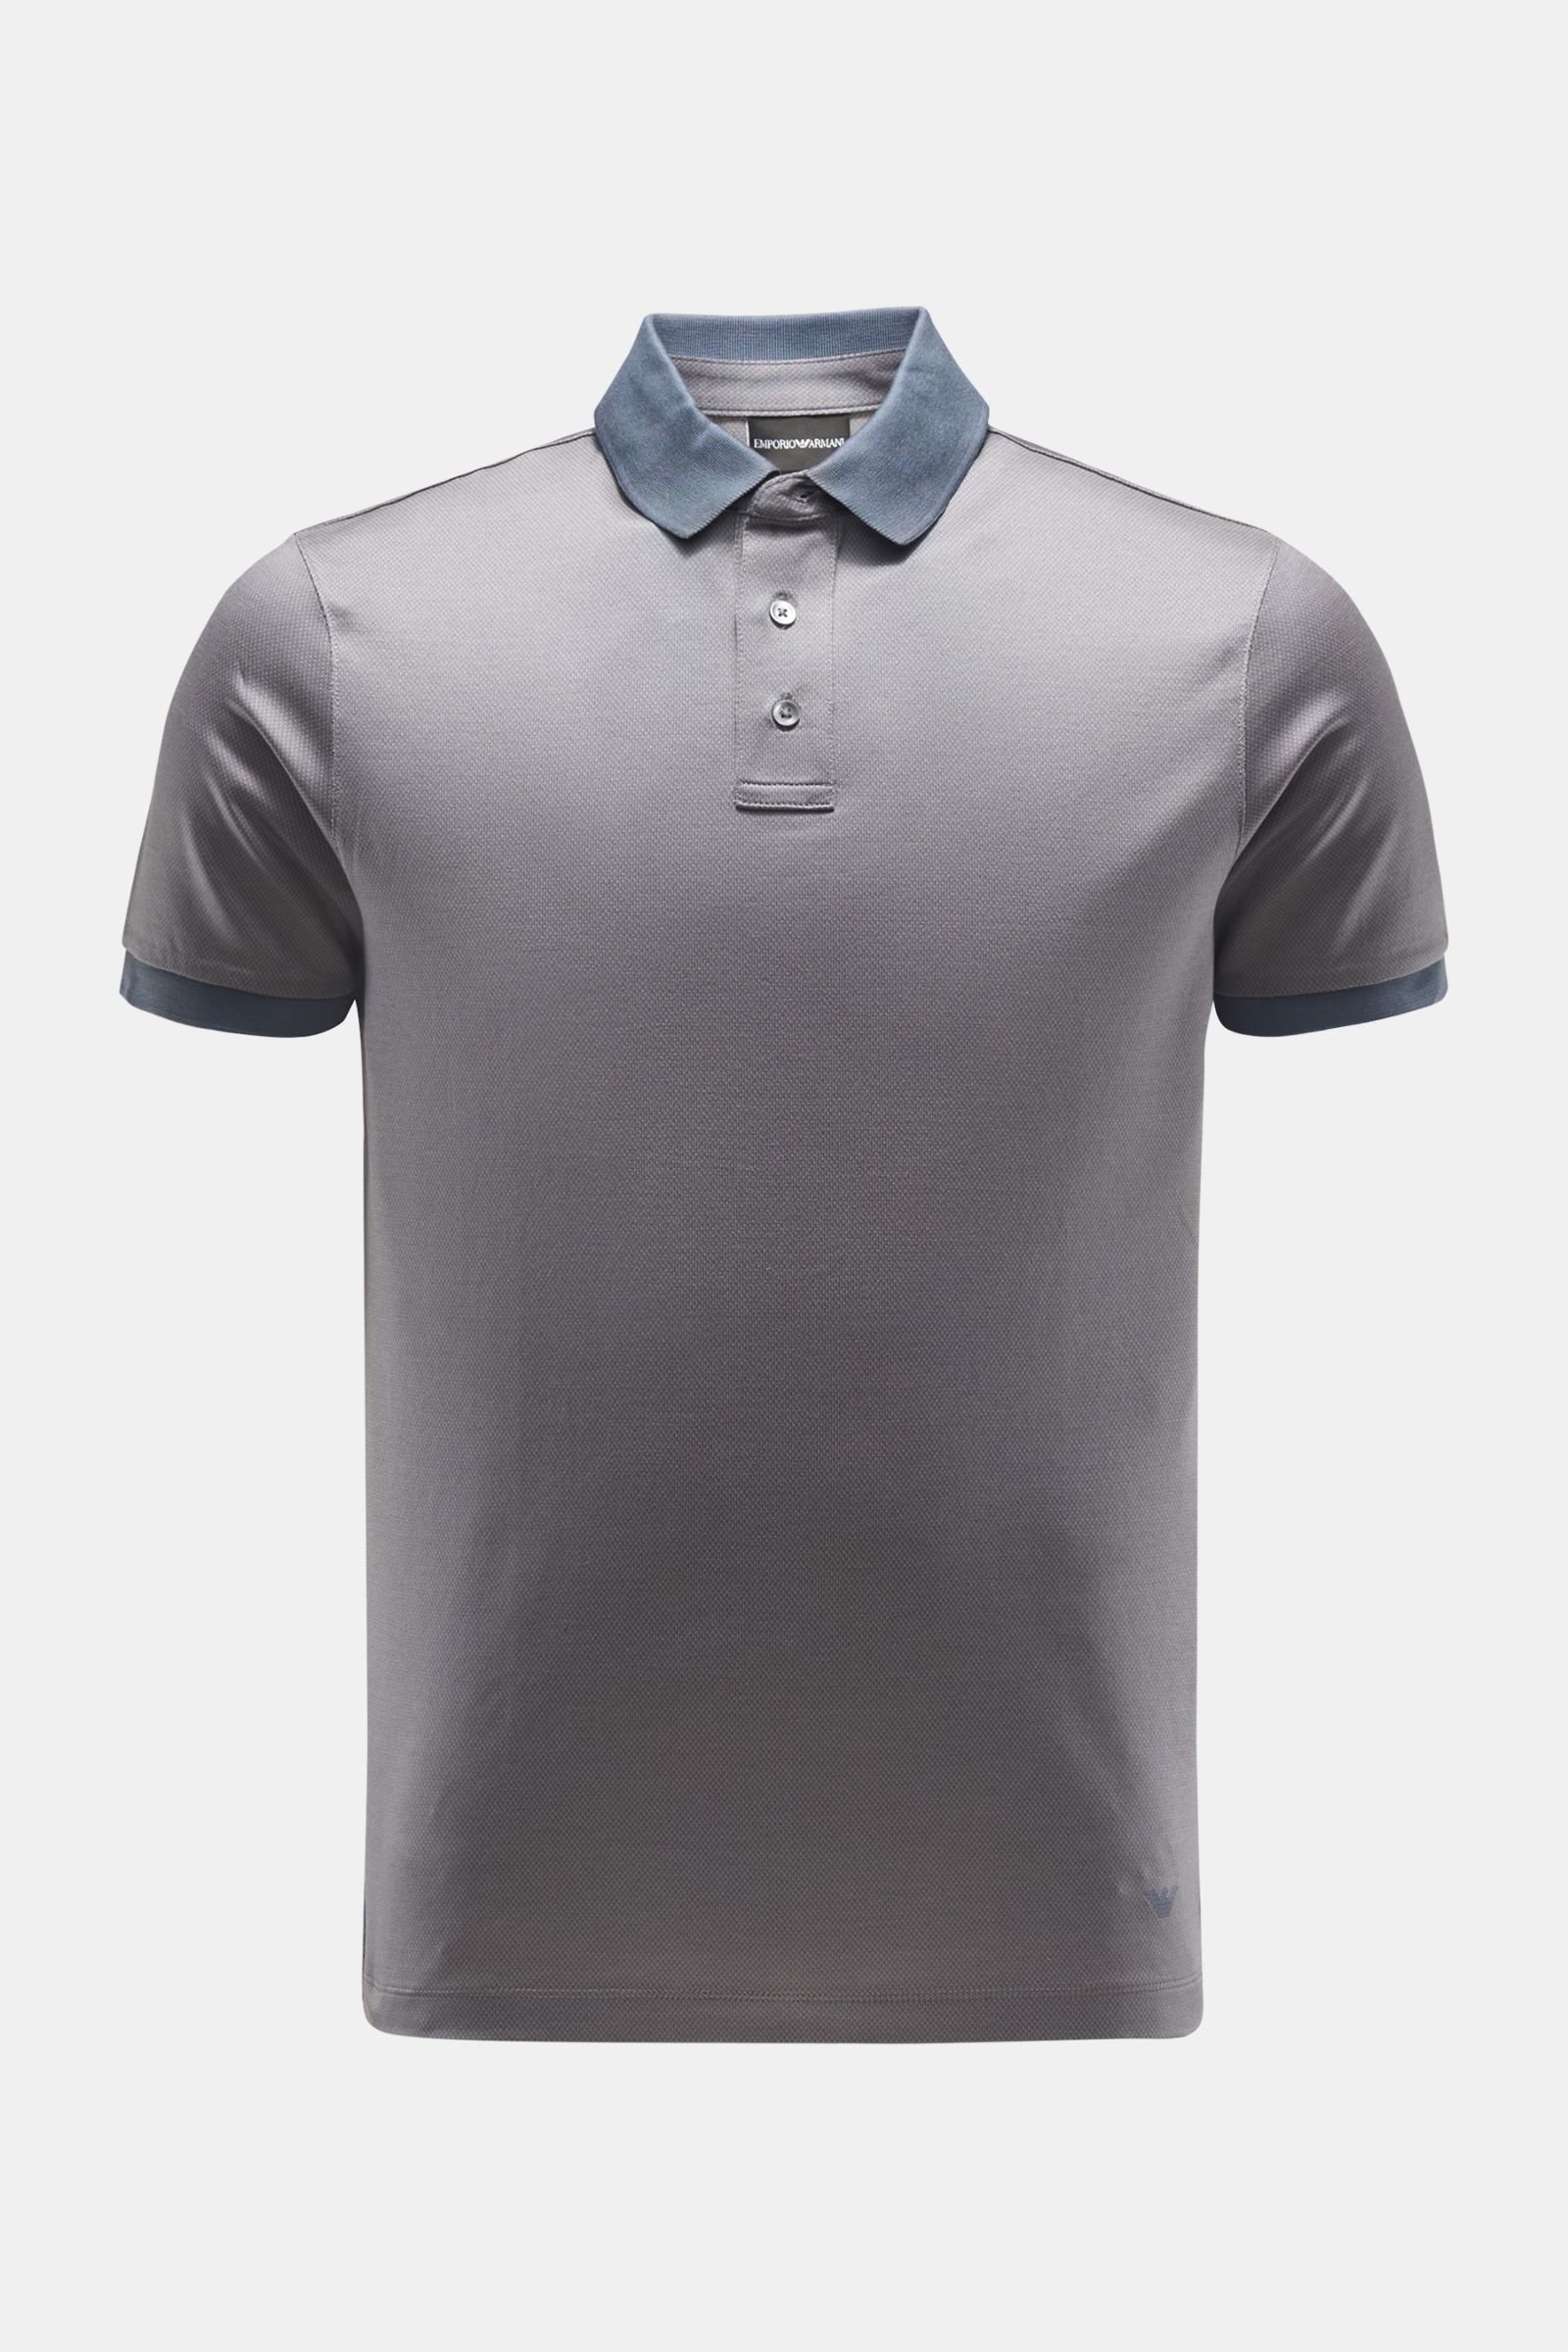 Polo shirt grey-blue/grey patterned